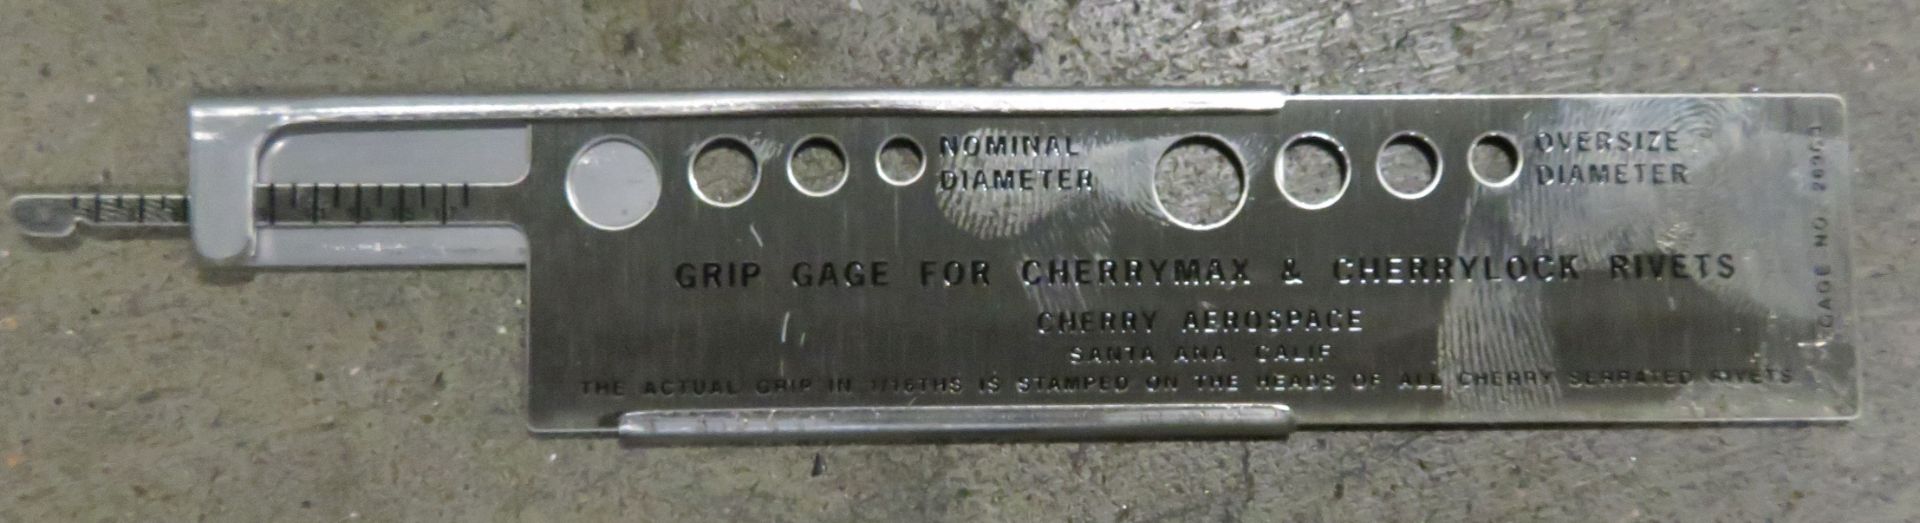 Cherry Aerospace pneumatic rivetter - Image 4 of 6